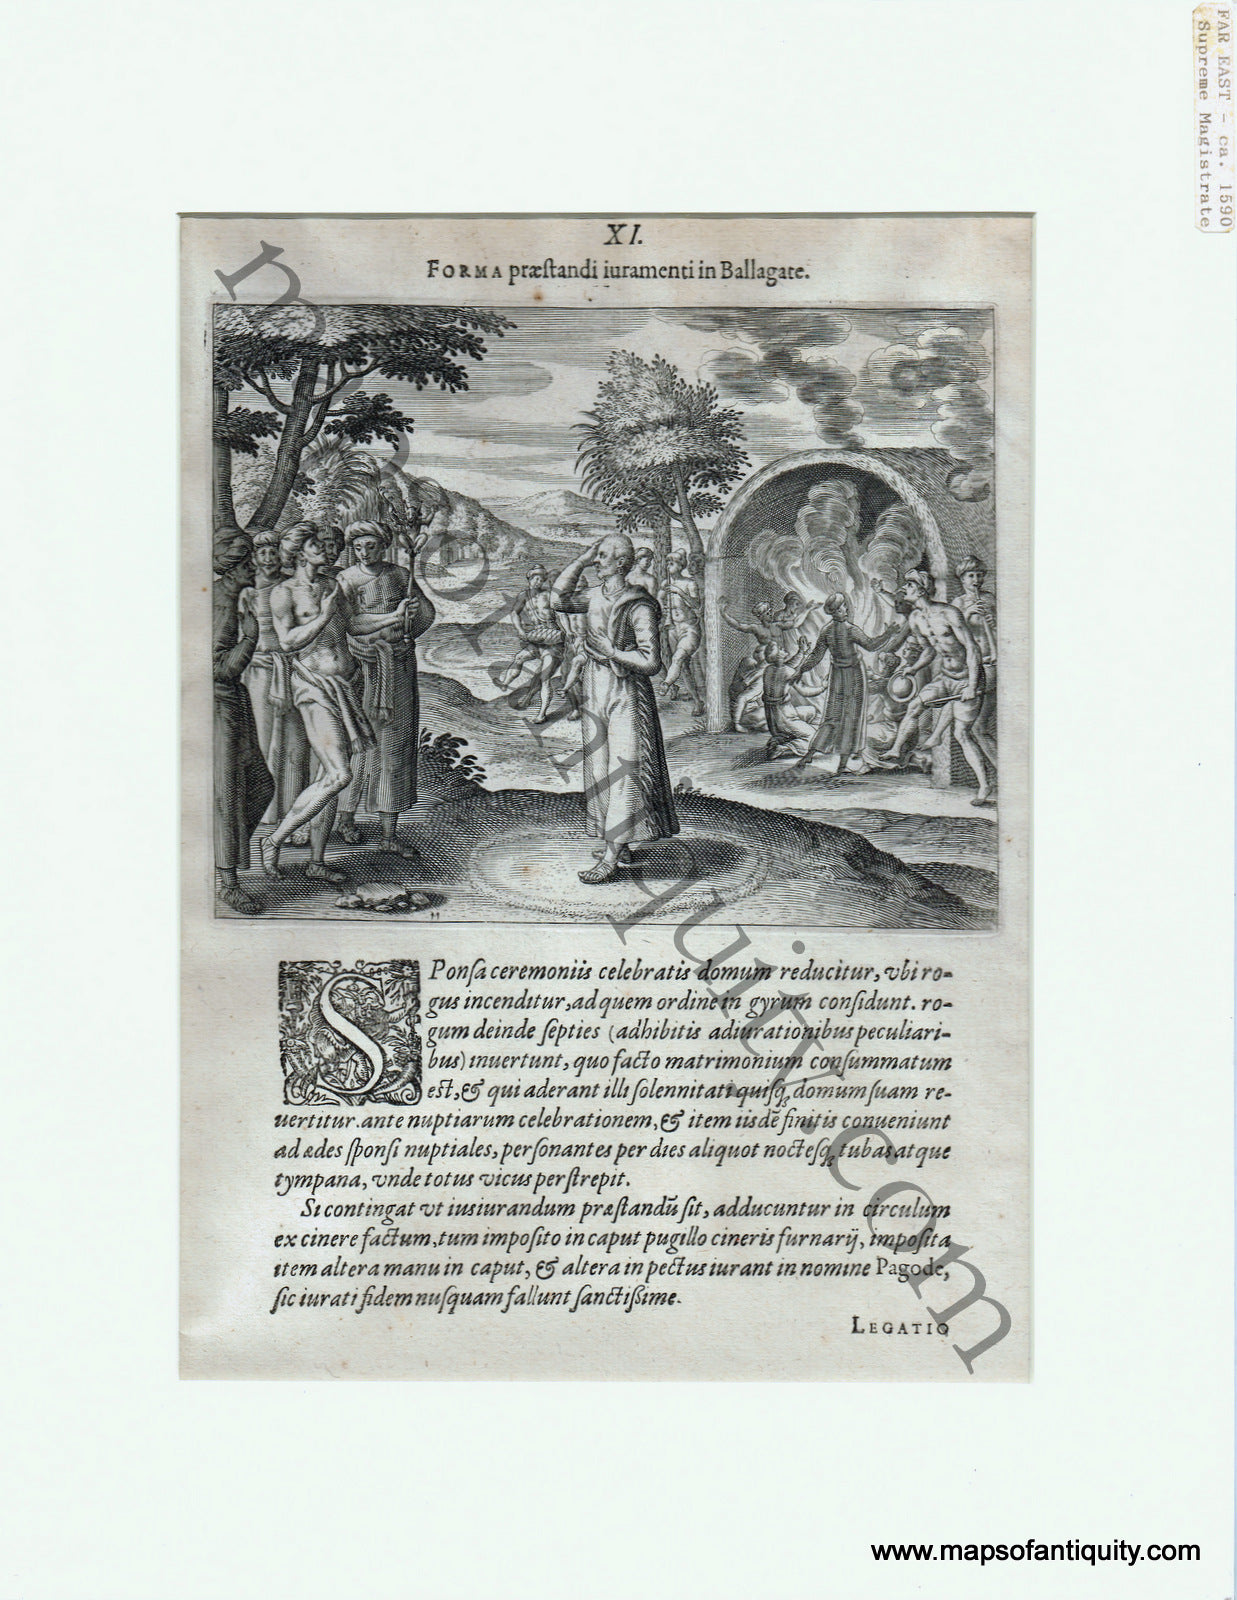 Antique-Black-and-White-Engraved-Illustration-Forma-praeftandi-iuramenti-in-Ballagate-Antique-Prints-Historical-Prints-c.-1590-1600-Theodor-De-Bry-Maps-Of-Antiquity